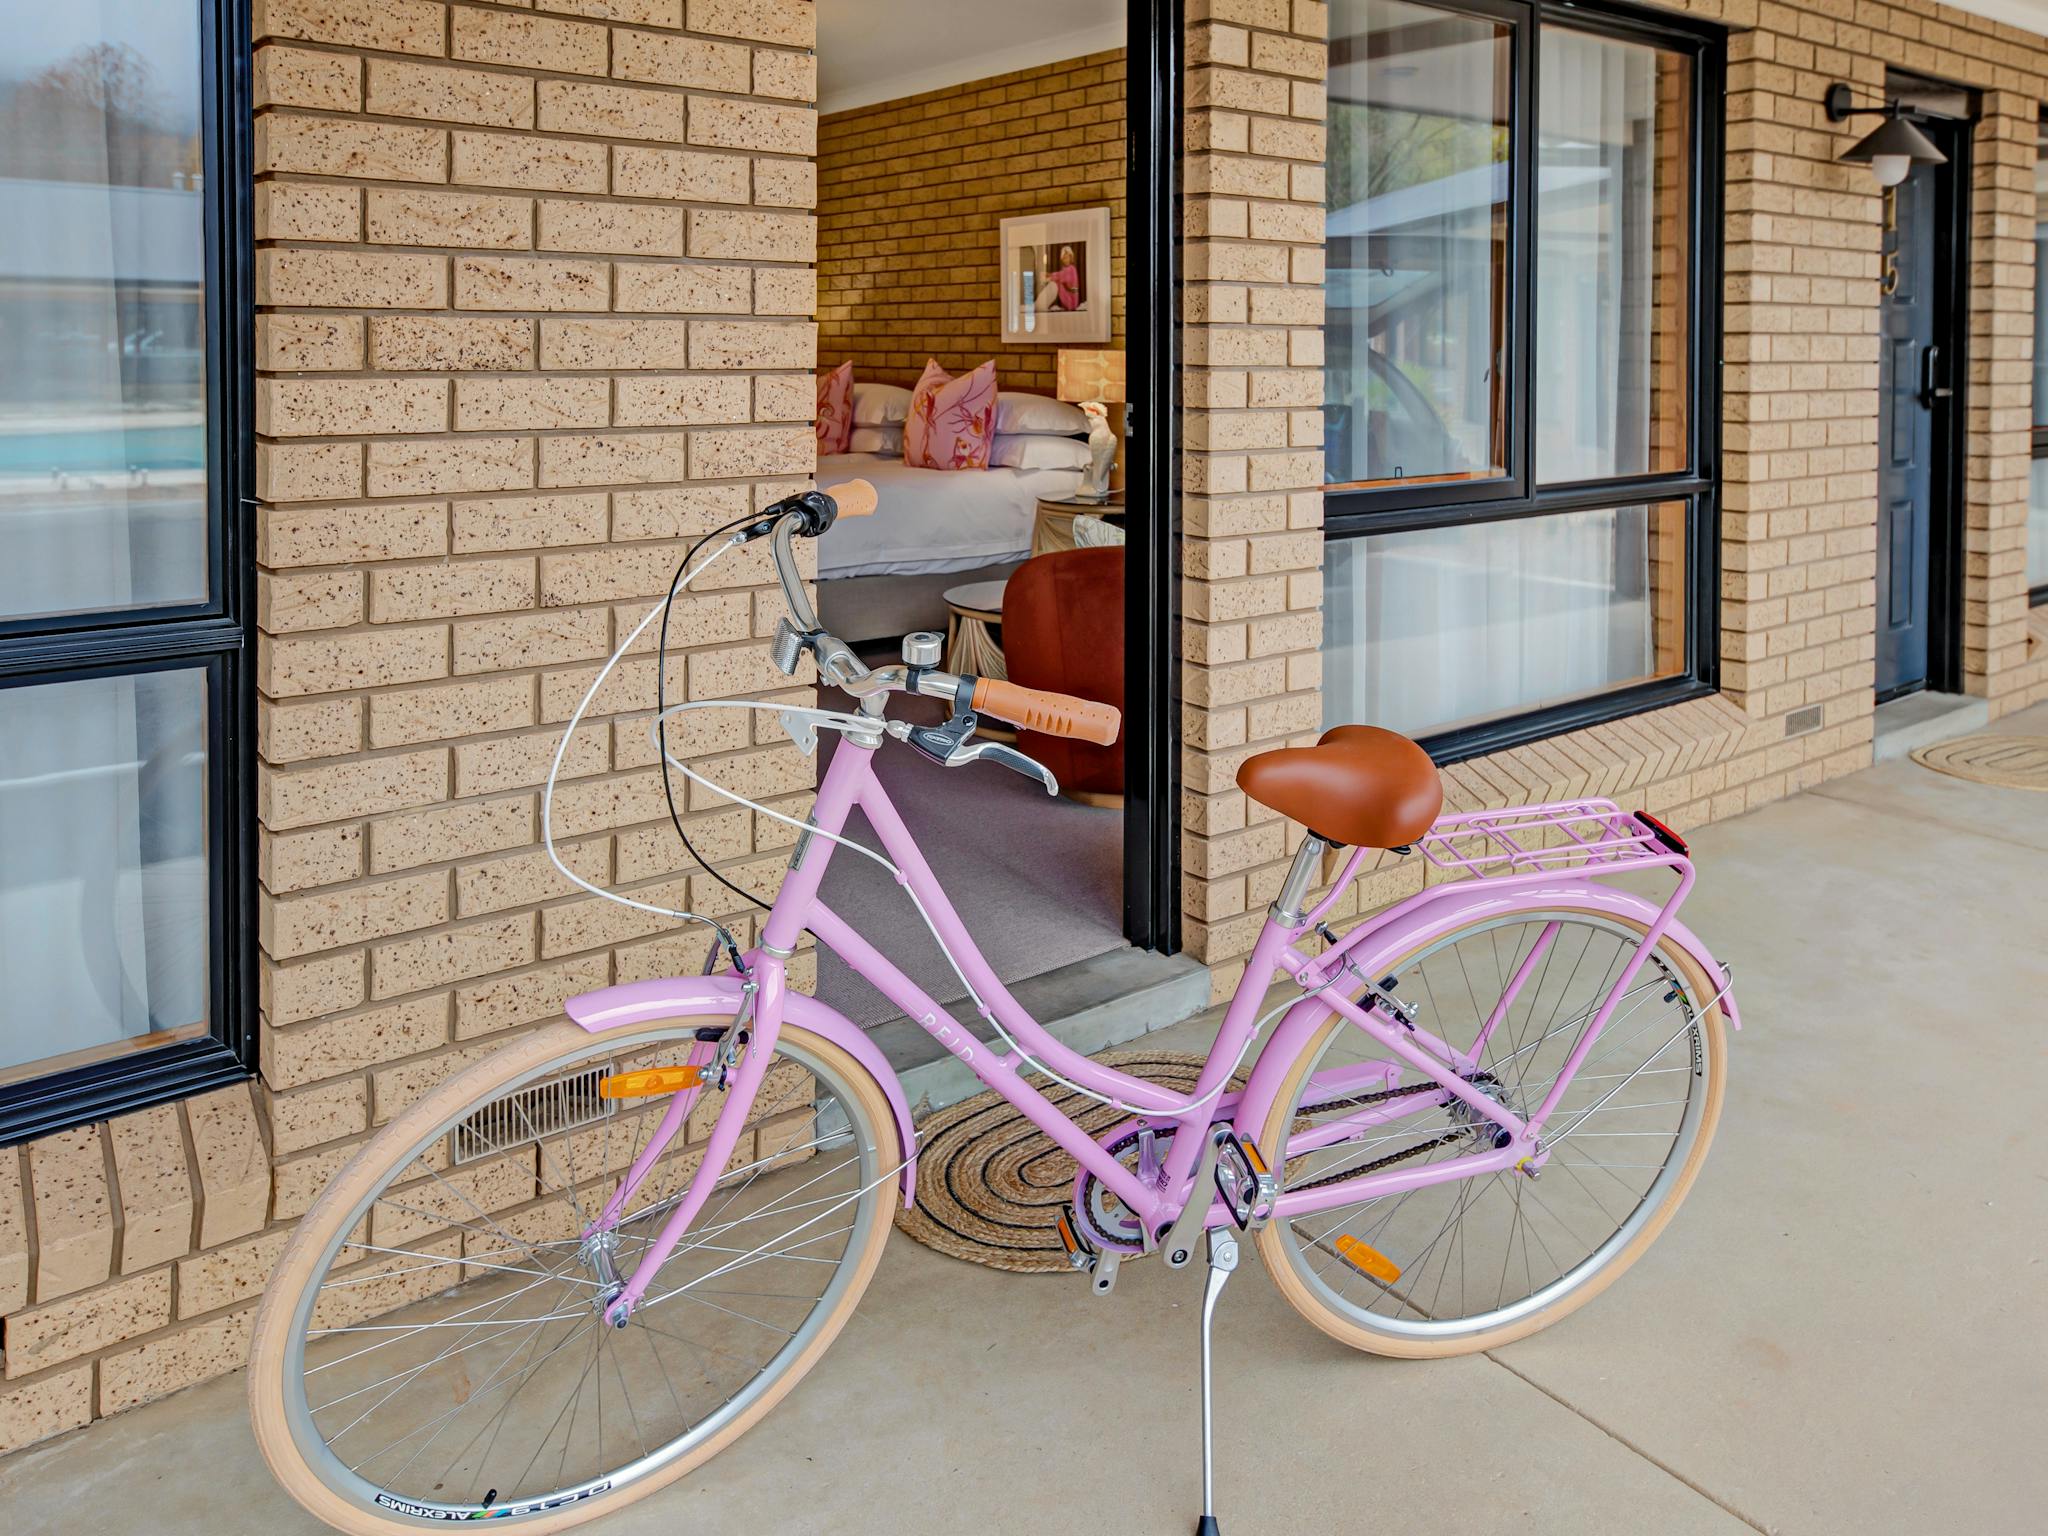 Hara House complimentary Reid bikes